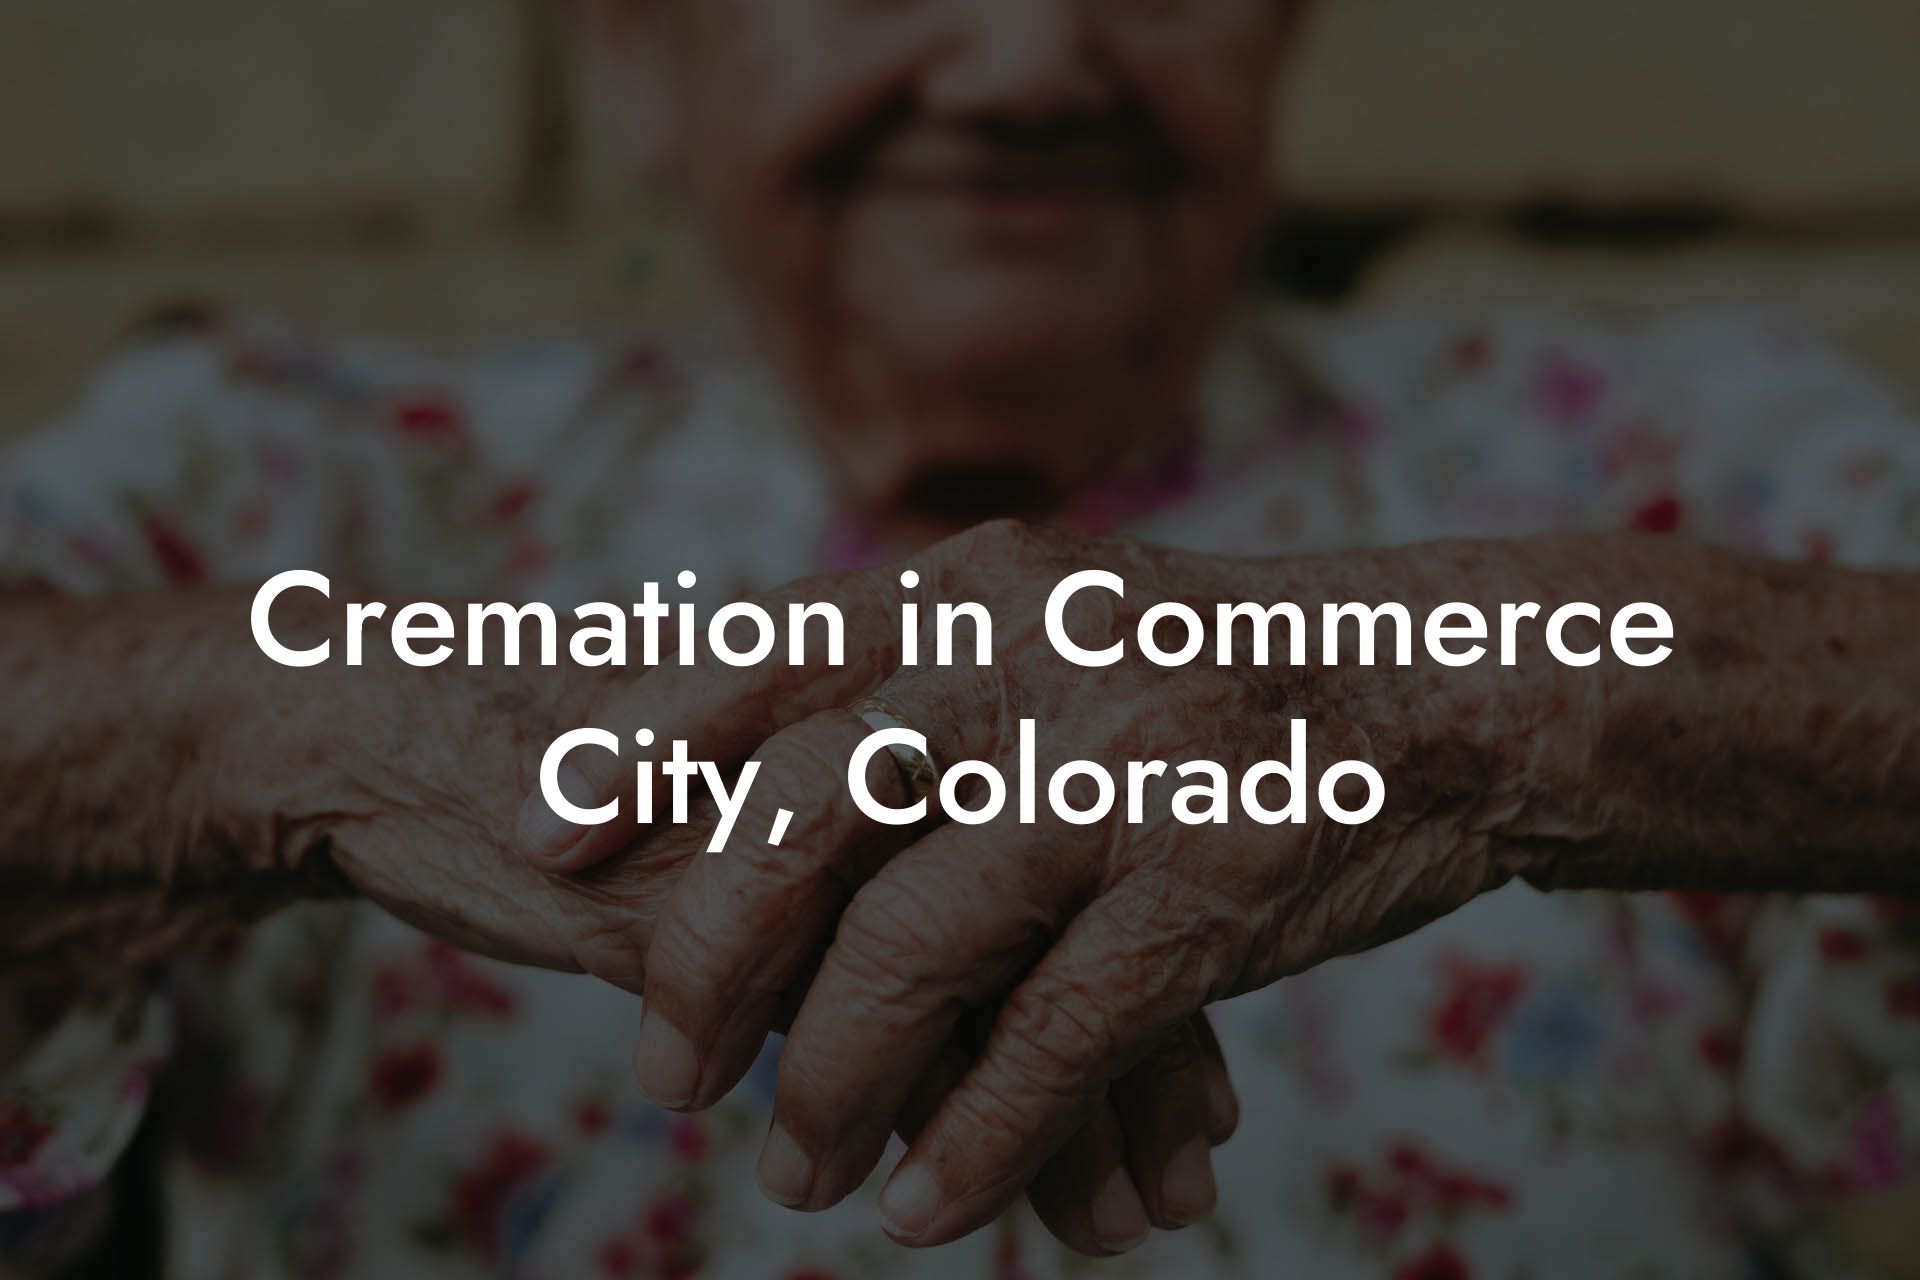 Cremation in Commerce City, Colorado